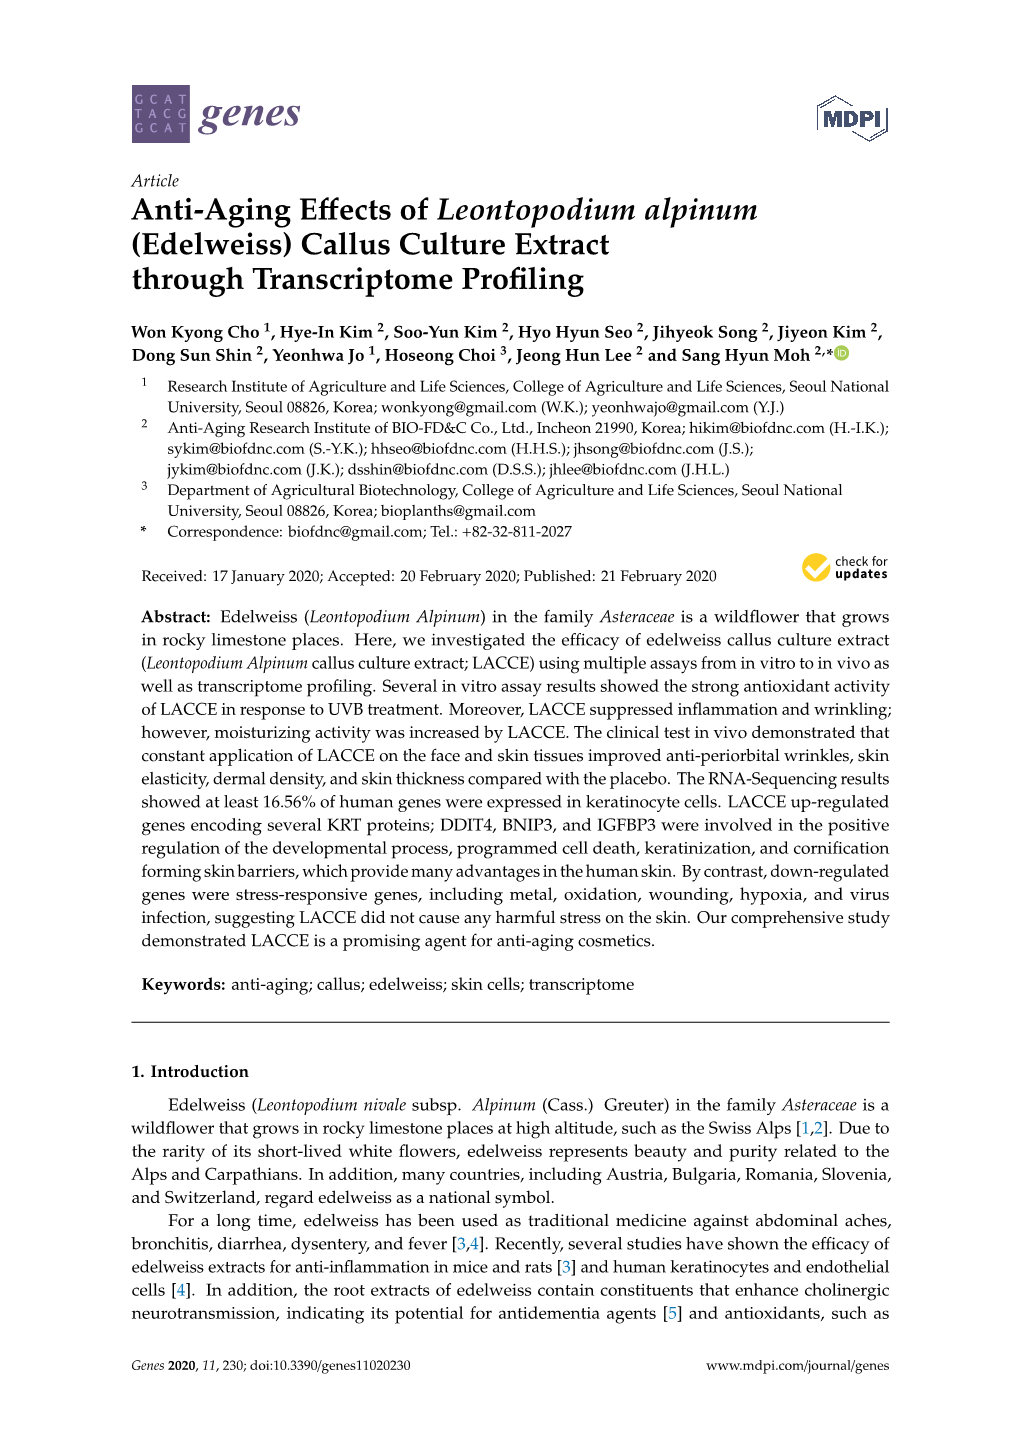 Anti-Aging Effects of Leontopodium Alpinum (Edelweiss) Callus Culture